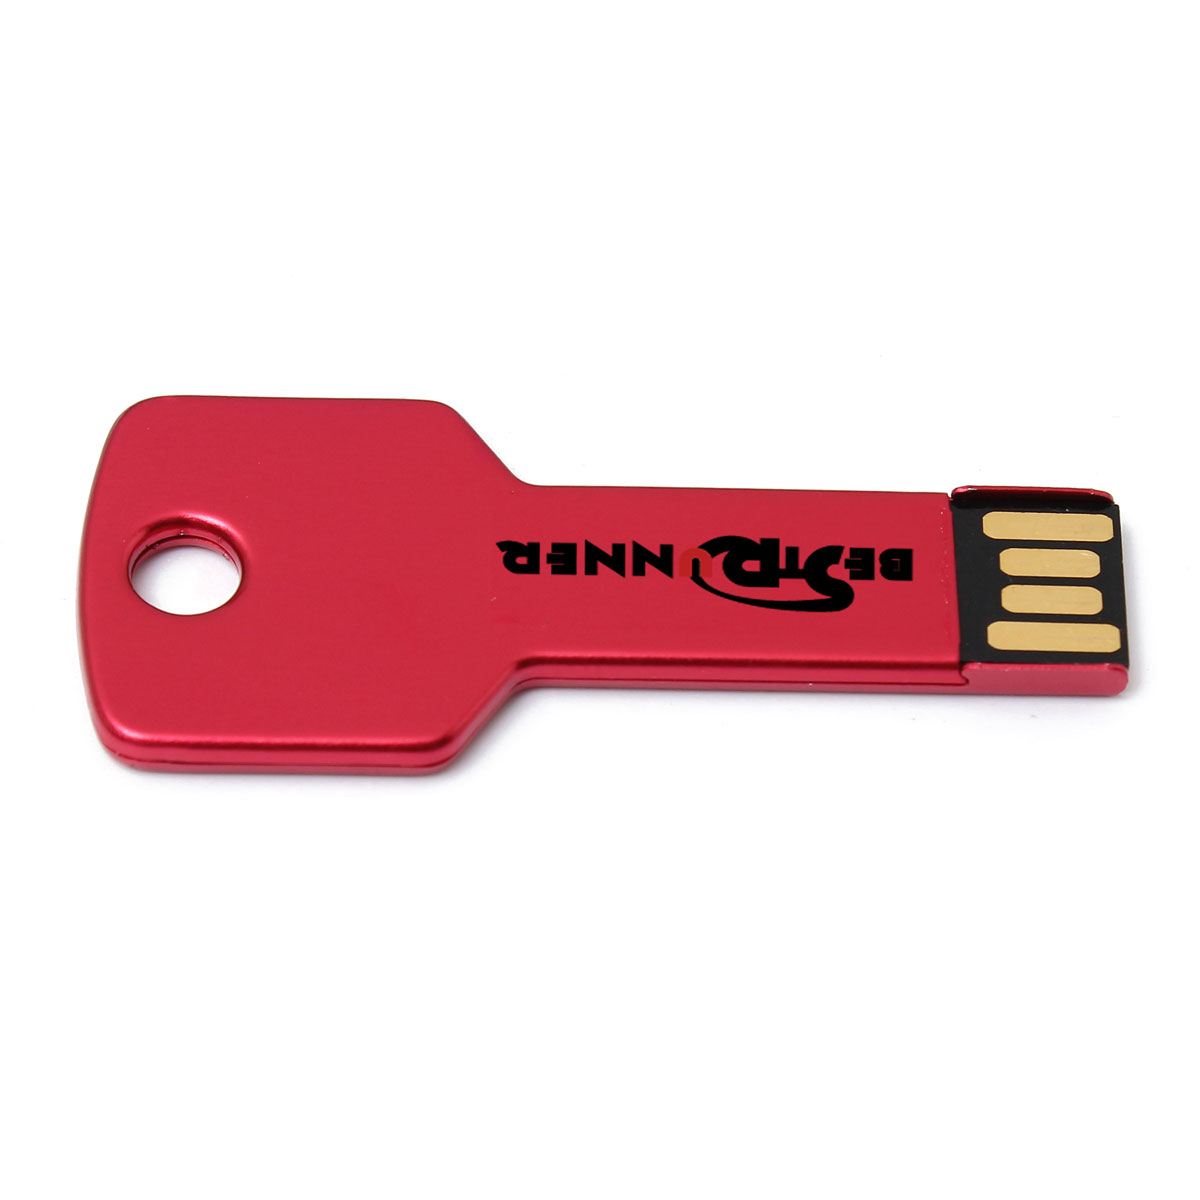 Bestrunner-2GB-USB-Metal-Key-Drive-Flash-Memory-Drive-Thumb-Design-48486